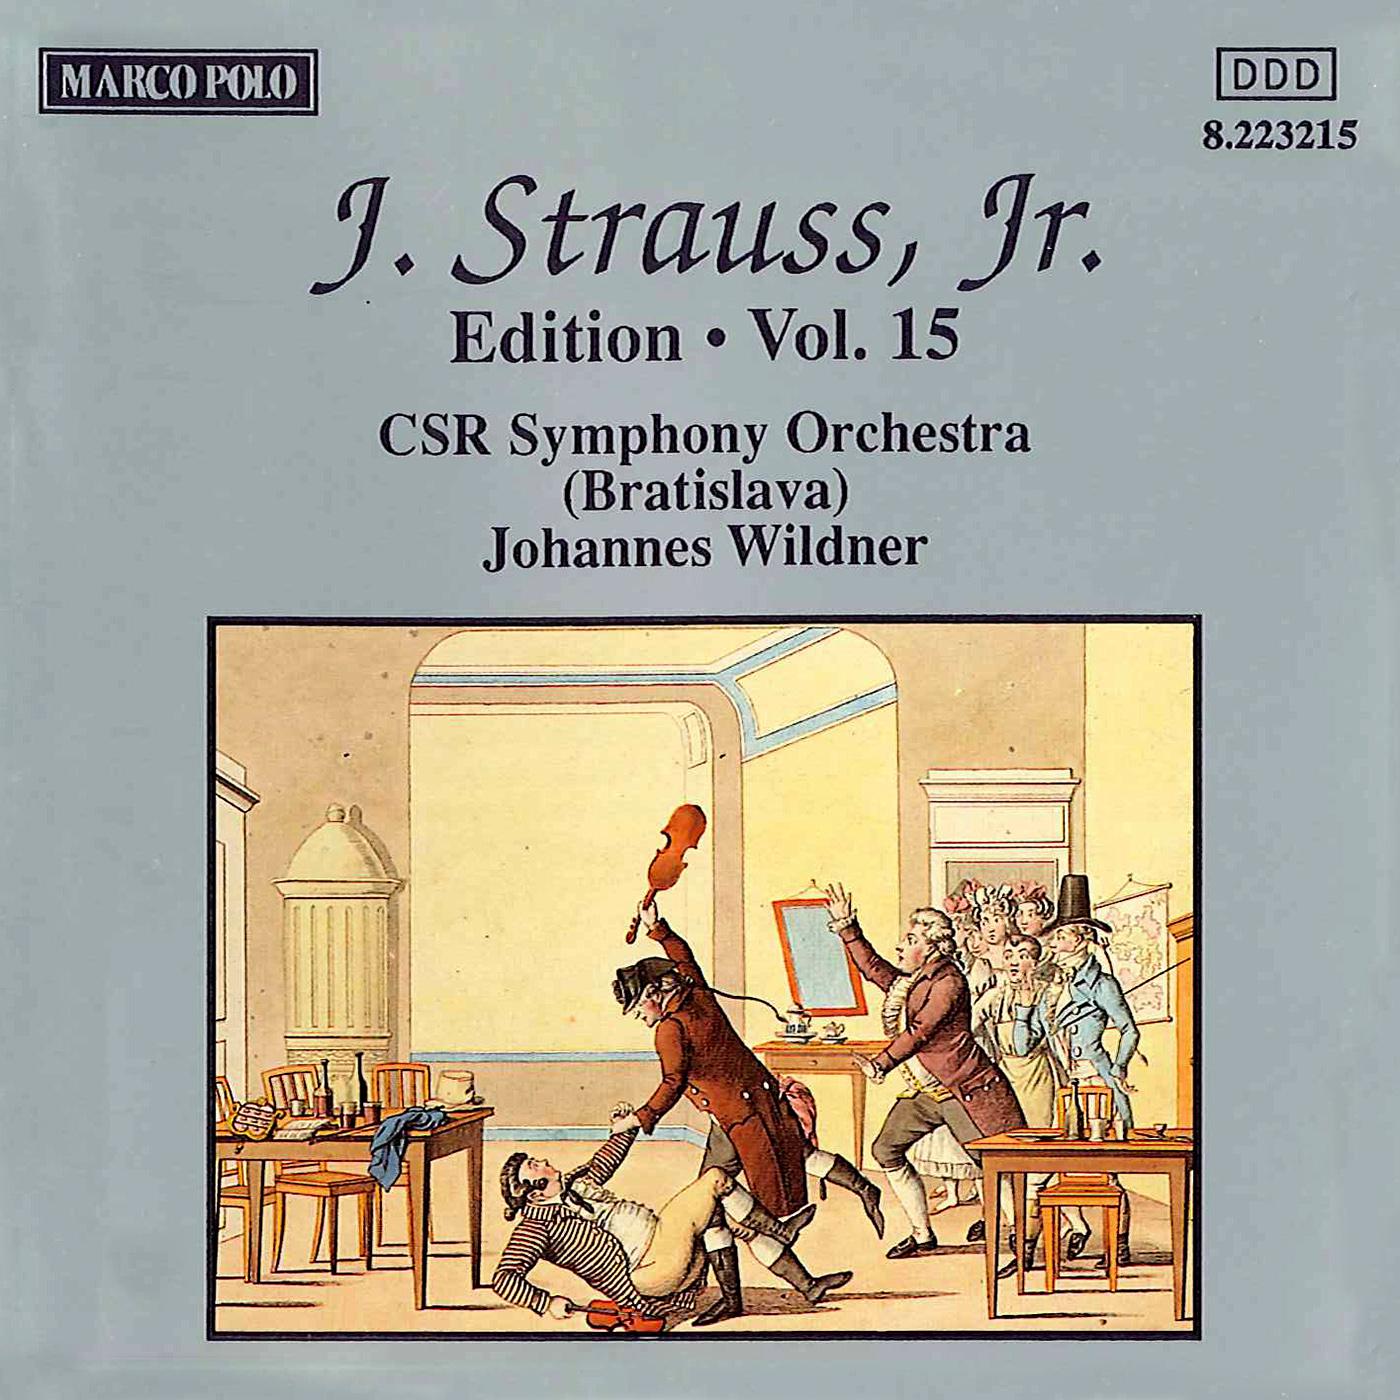 STRAUSS II, J.: Edition - Vol. 15